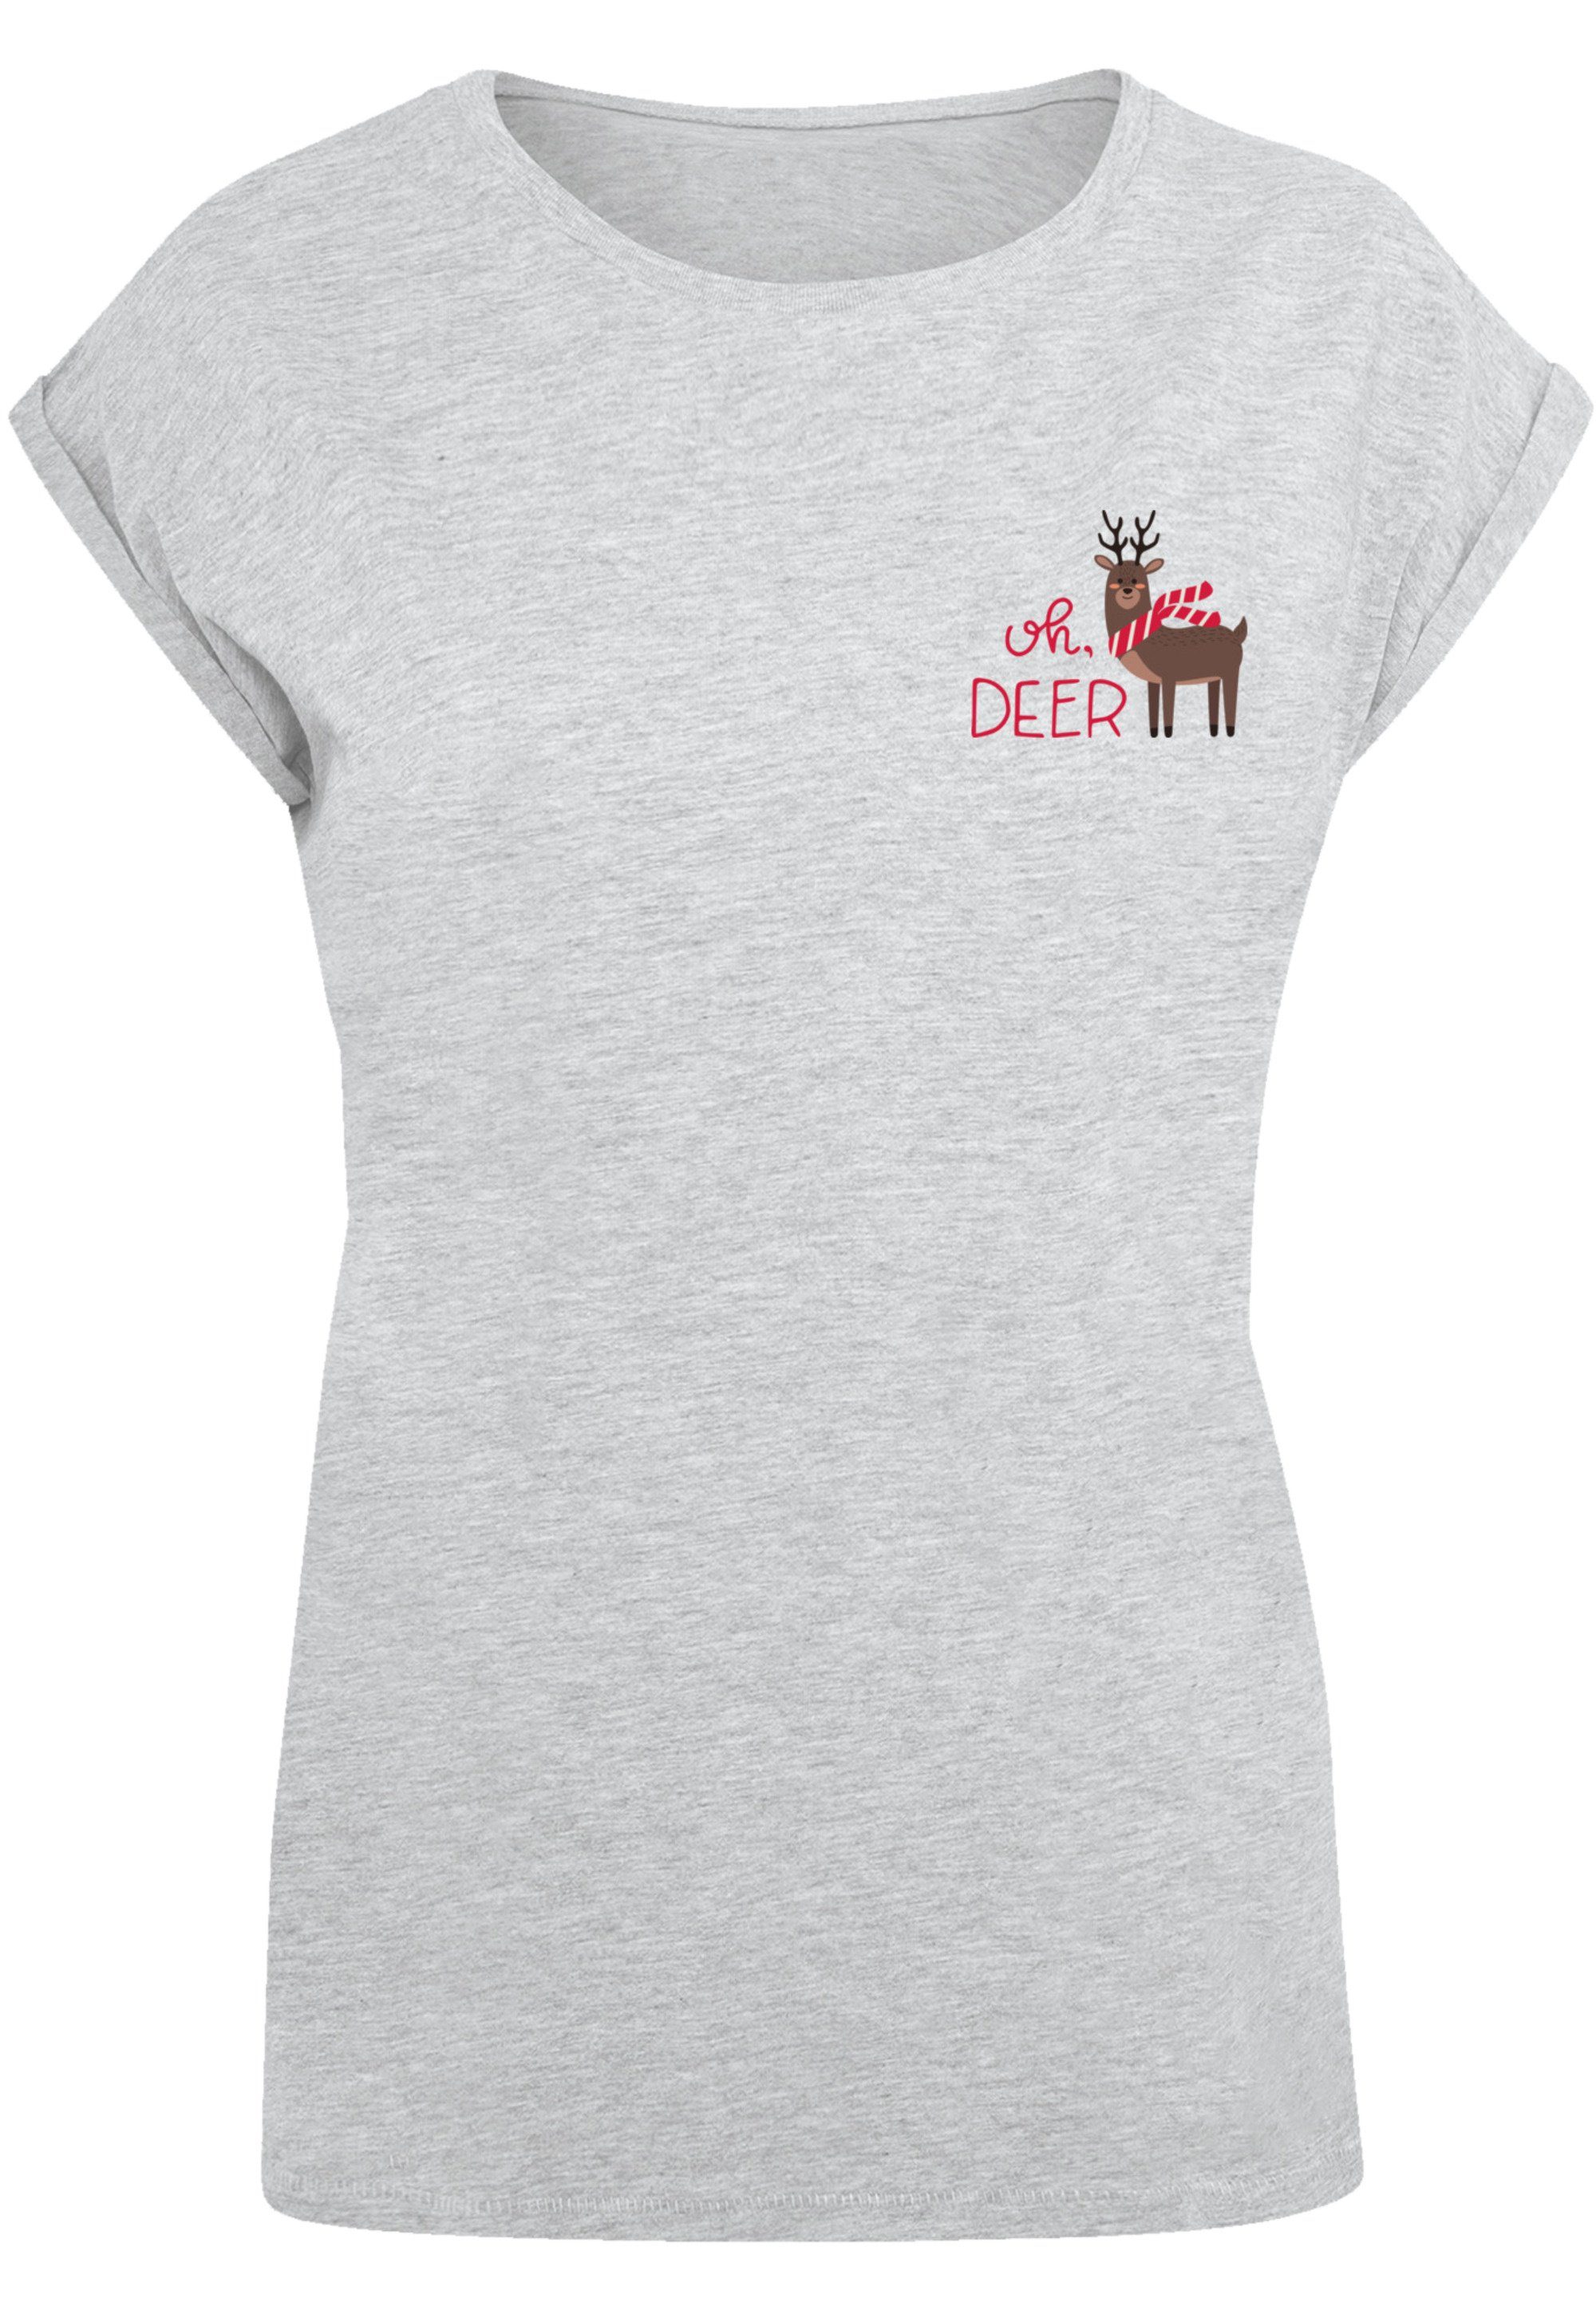 F4NT4STIC T-Shirt Christmas Premium heather Rock-Musik, grey Qualität, Deer Band